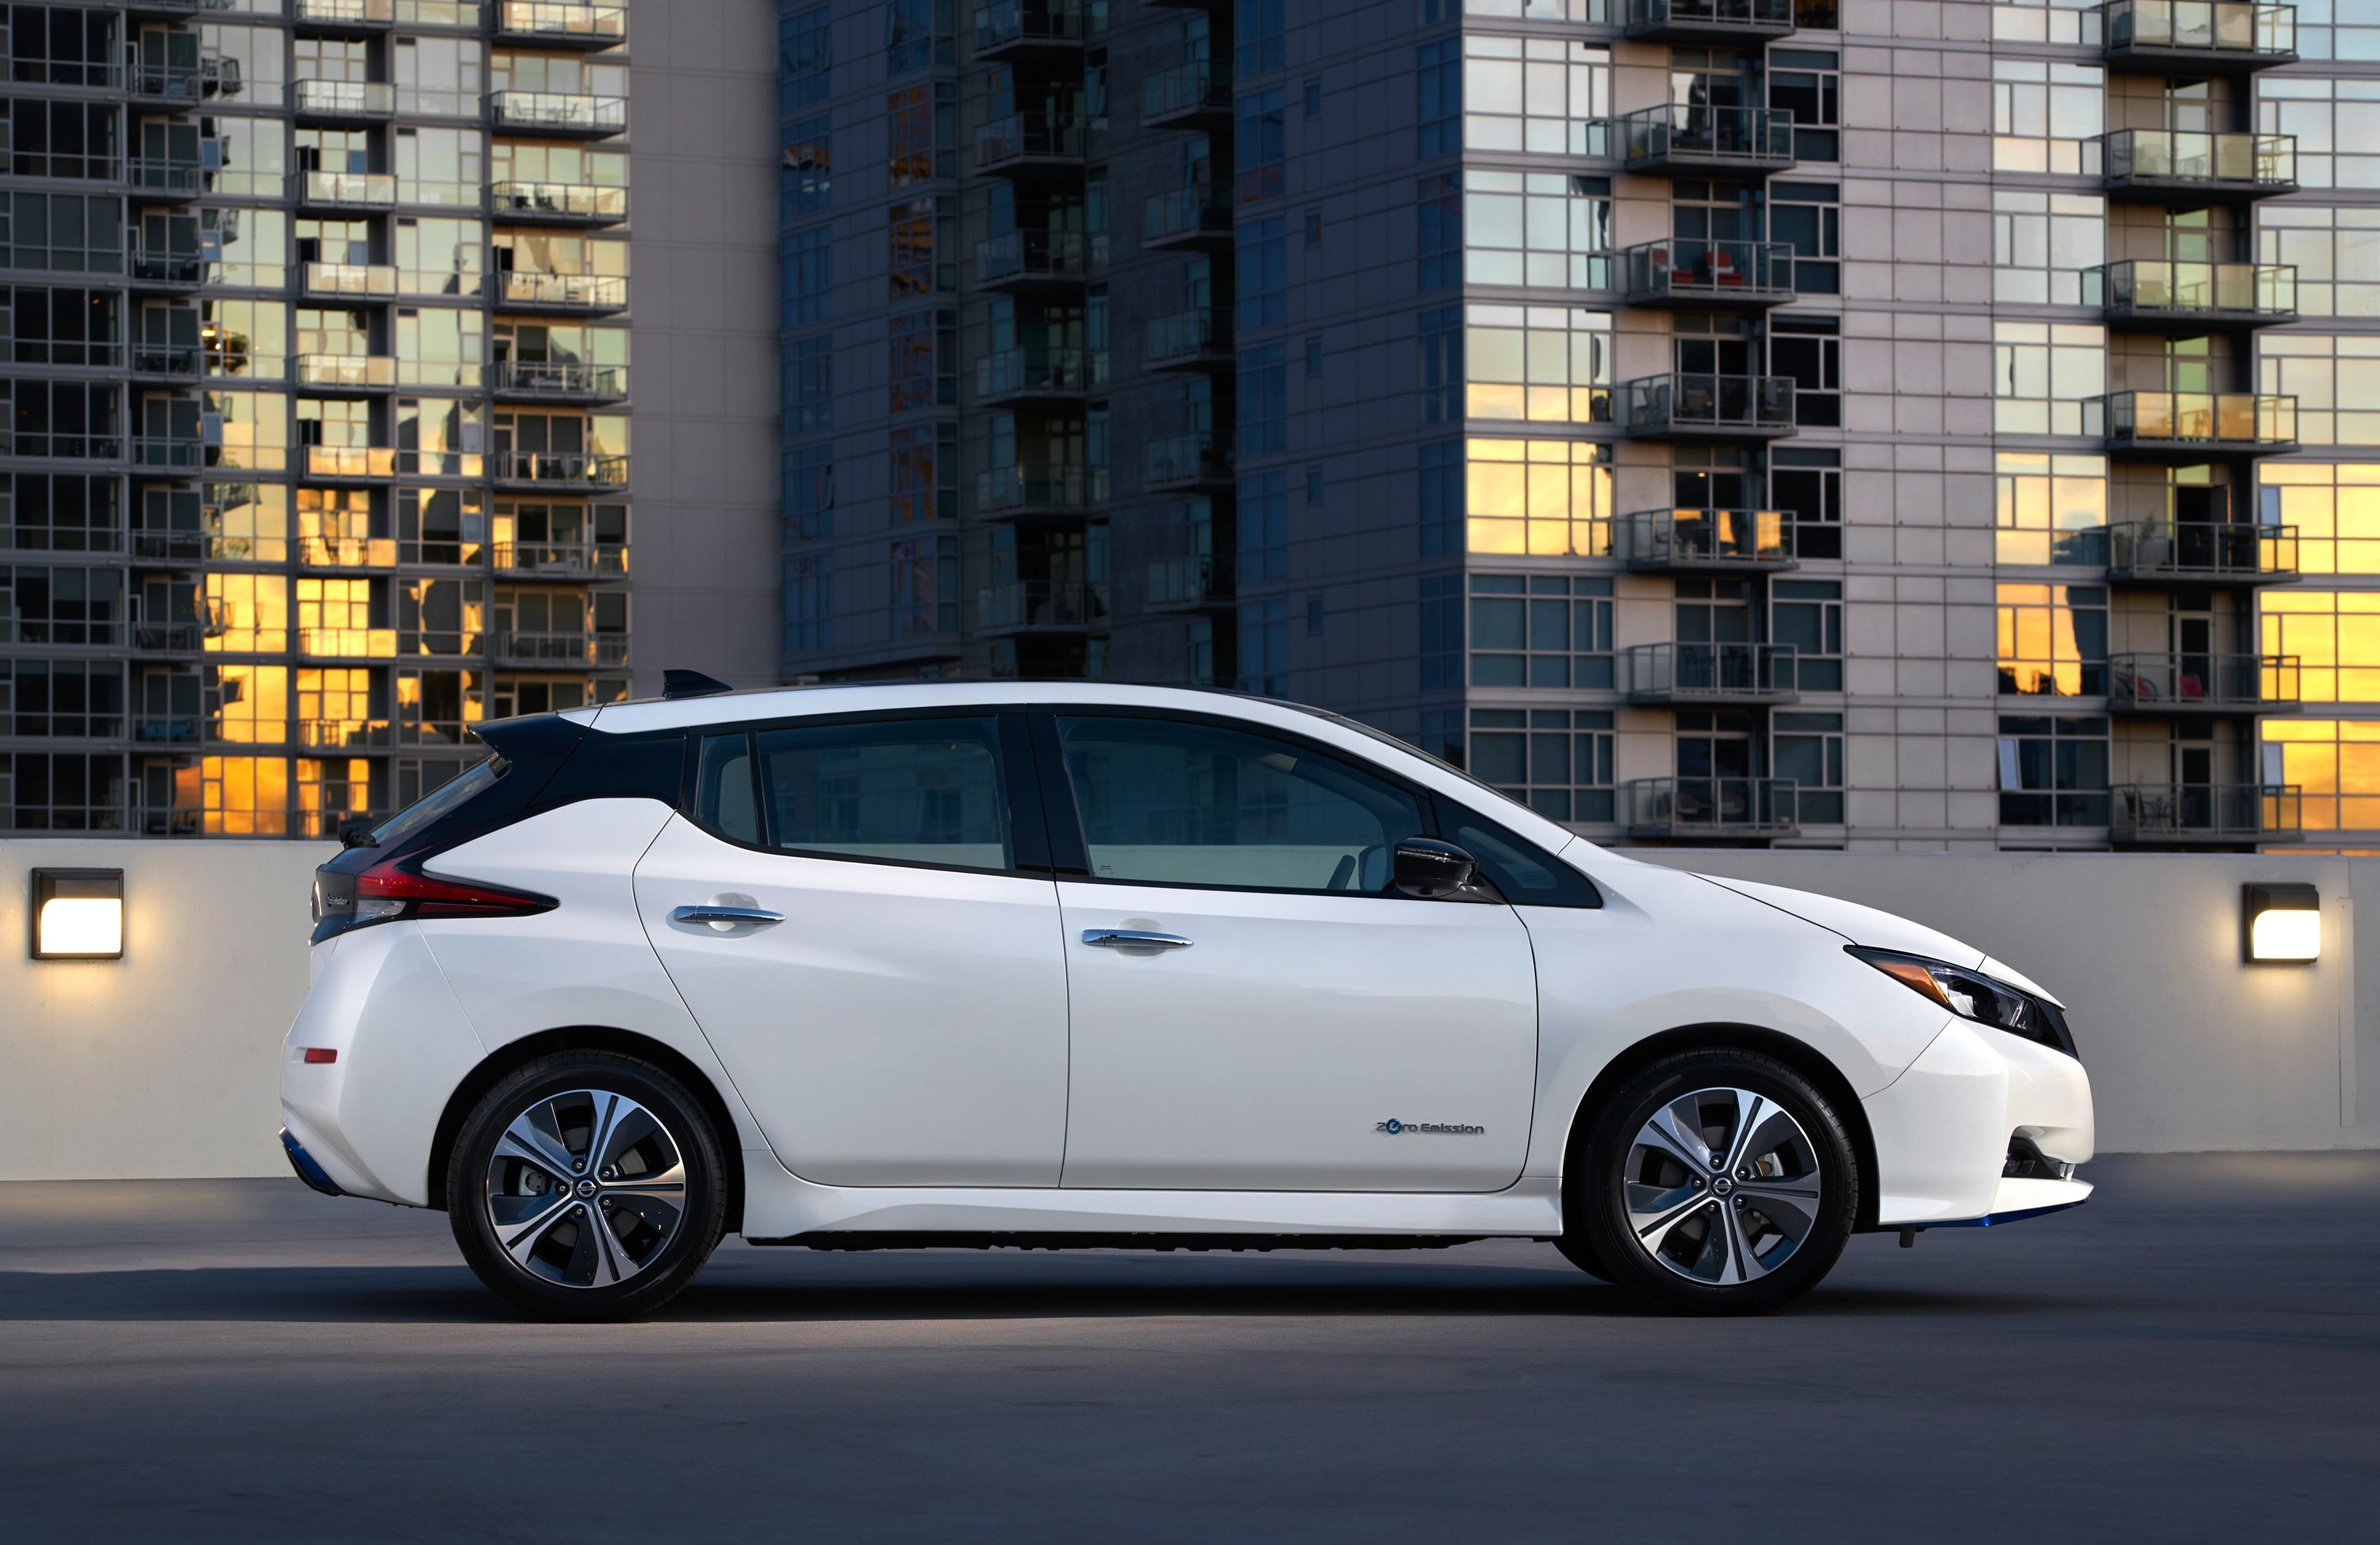 2019 Nissan Leaf PLUS first drive: Nissan's EV hatch now goes 226 miles